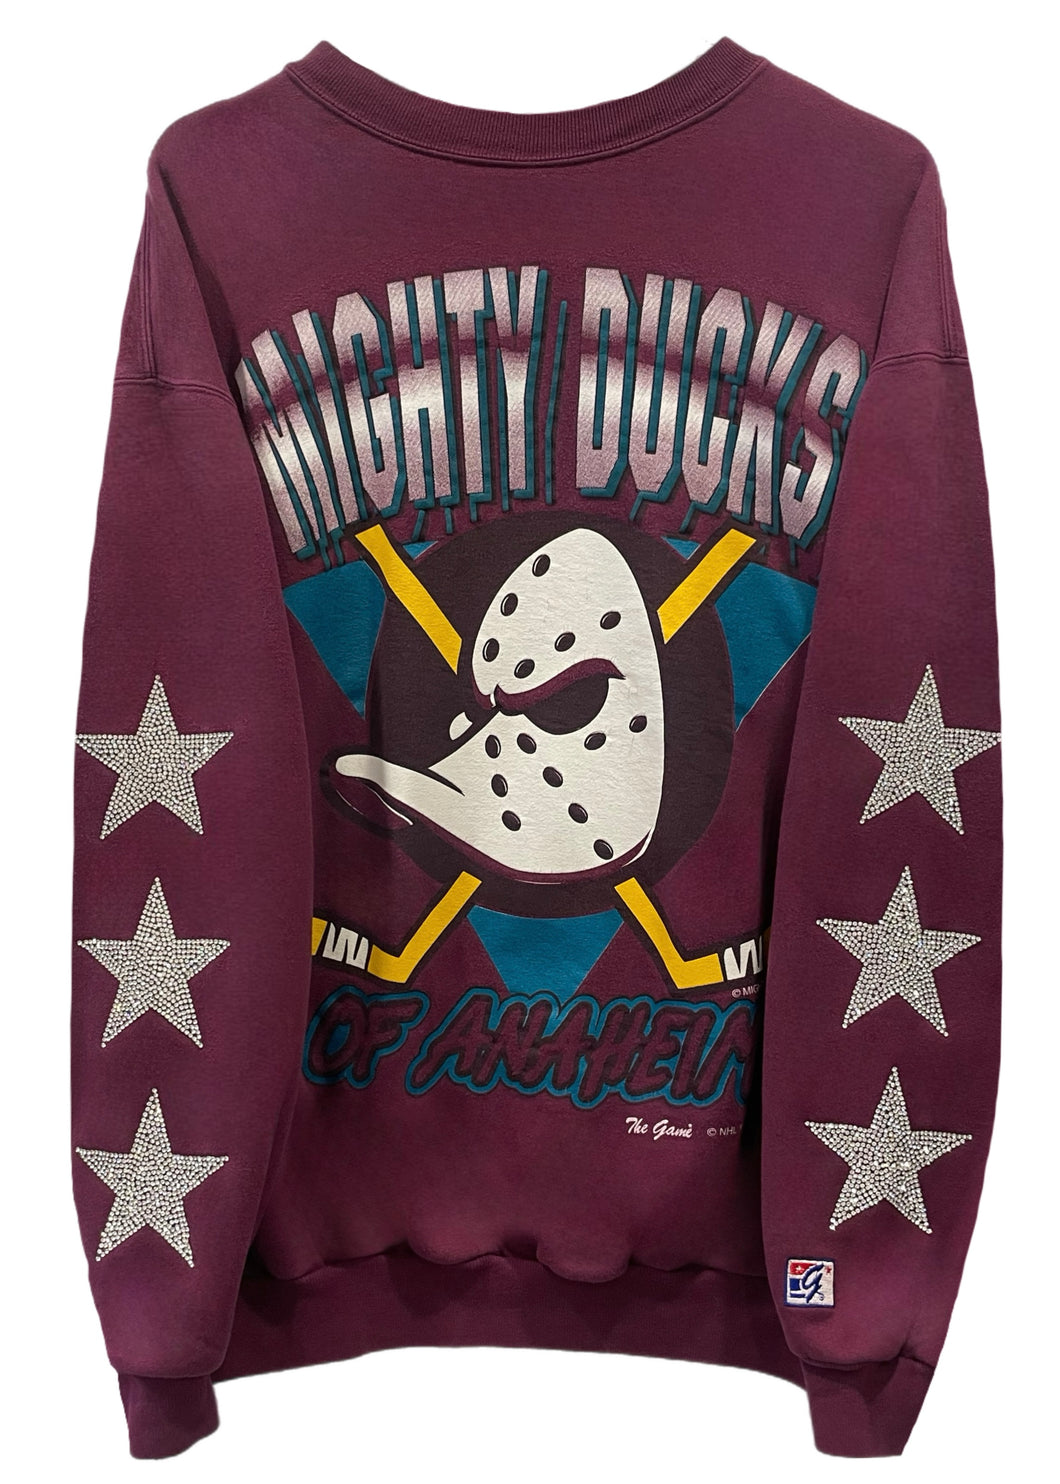 Anaheim Ducks, NHL One of a KIND Vintage “Mighty Ducks” Rare Find Sweatshirt with Three Crystal Star Design - Size: Large